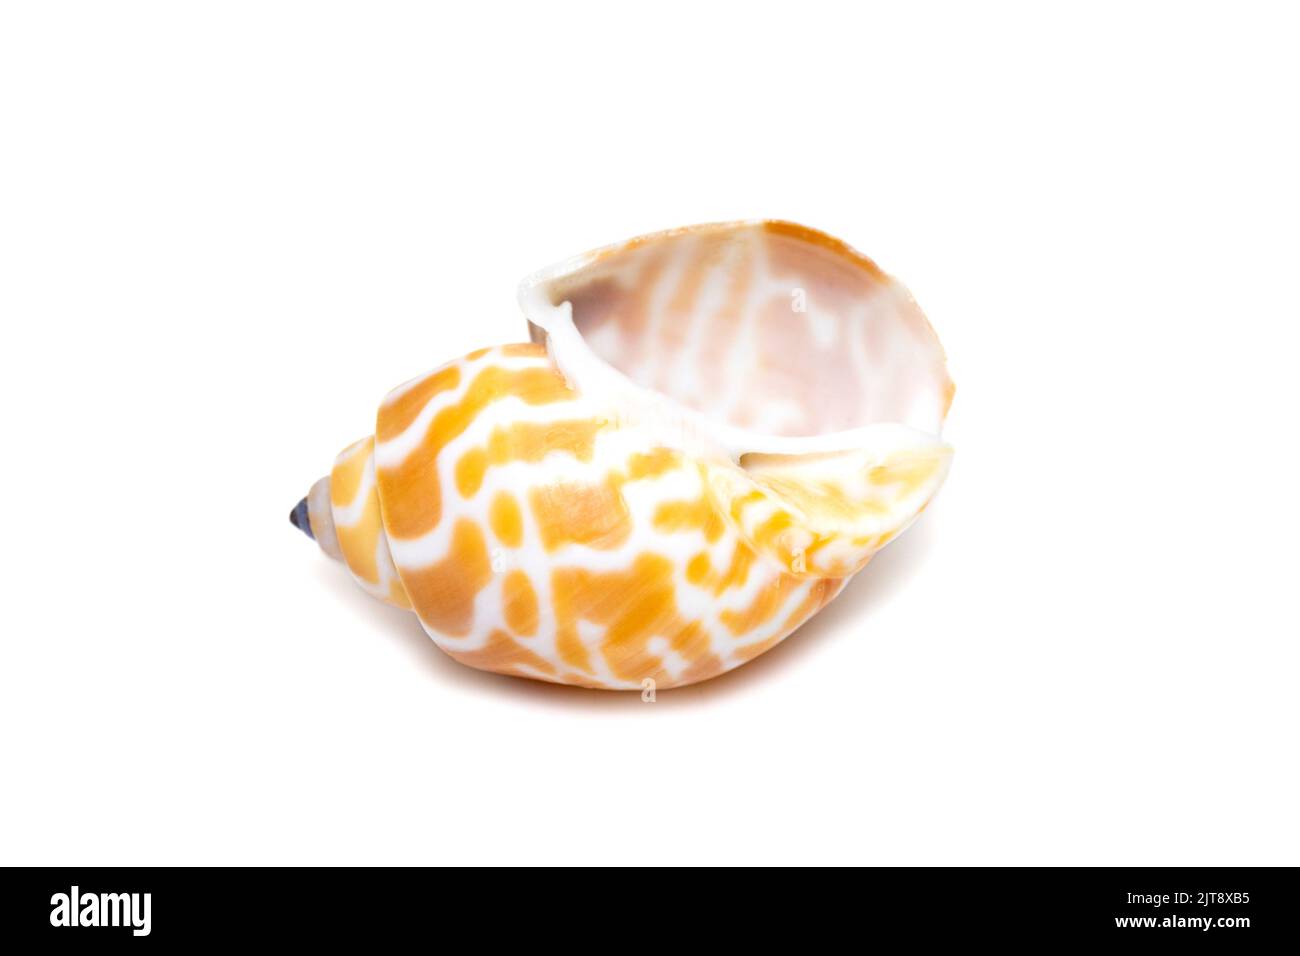 Image de babylonia spirata, nom commun la spirale Babylone, est une espèce d'escargot de mer, un mollusque de gastropodes marins, de la famille des Babyloniidae. Isoler Banque D'Images